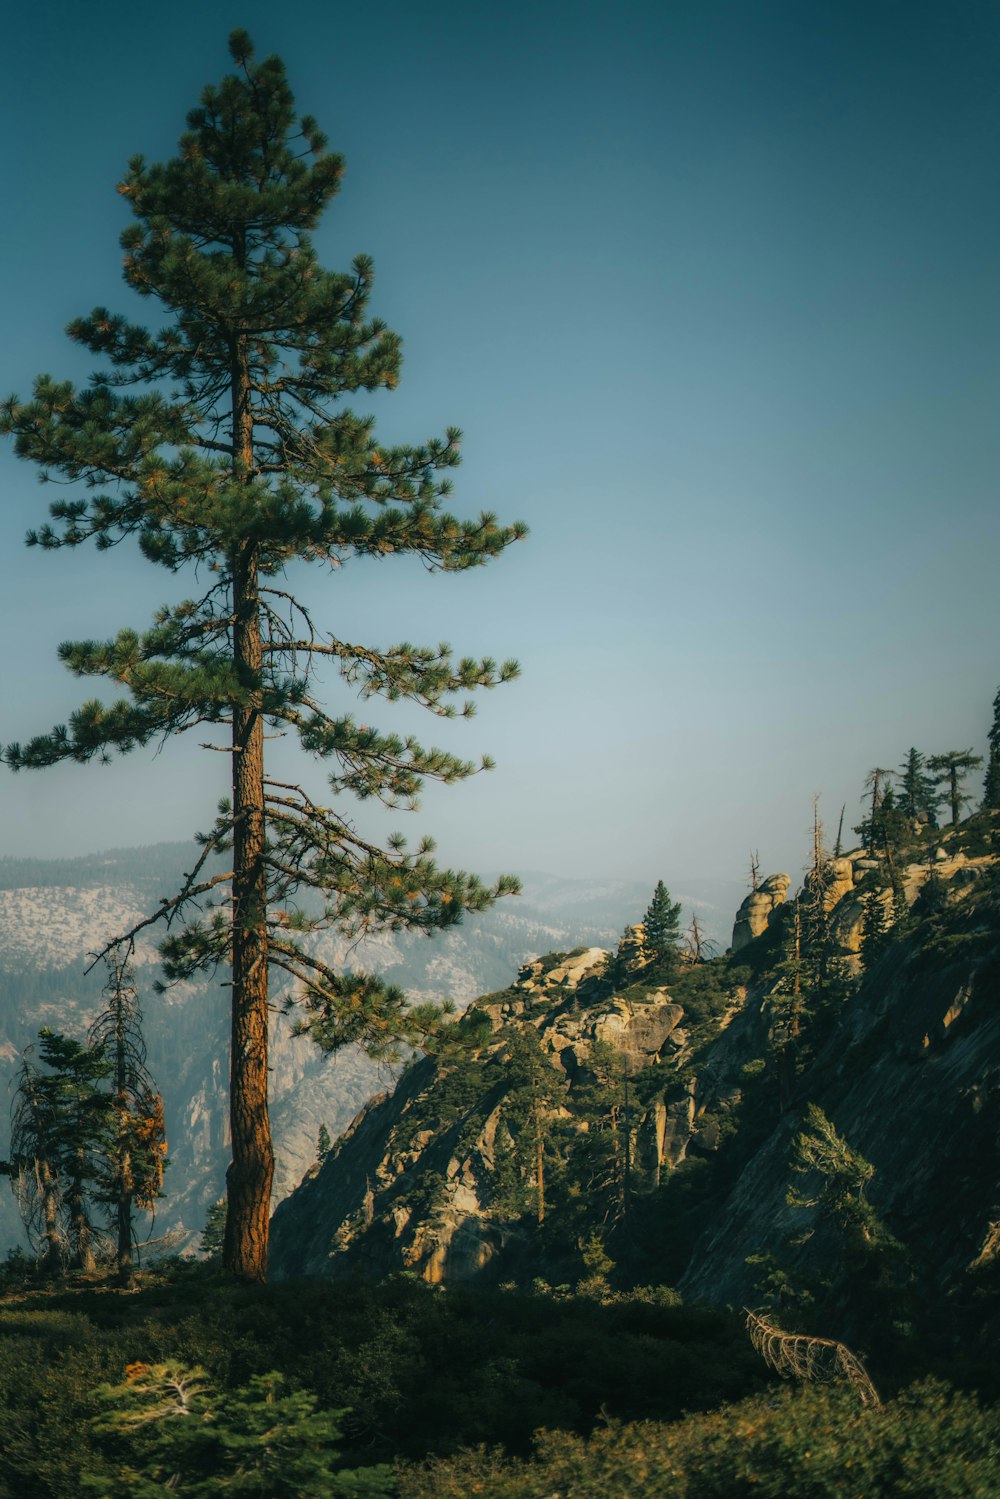 a tall pine tree on a mountain side